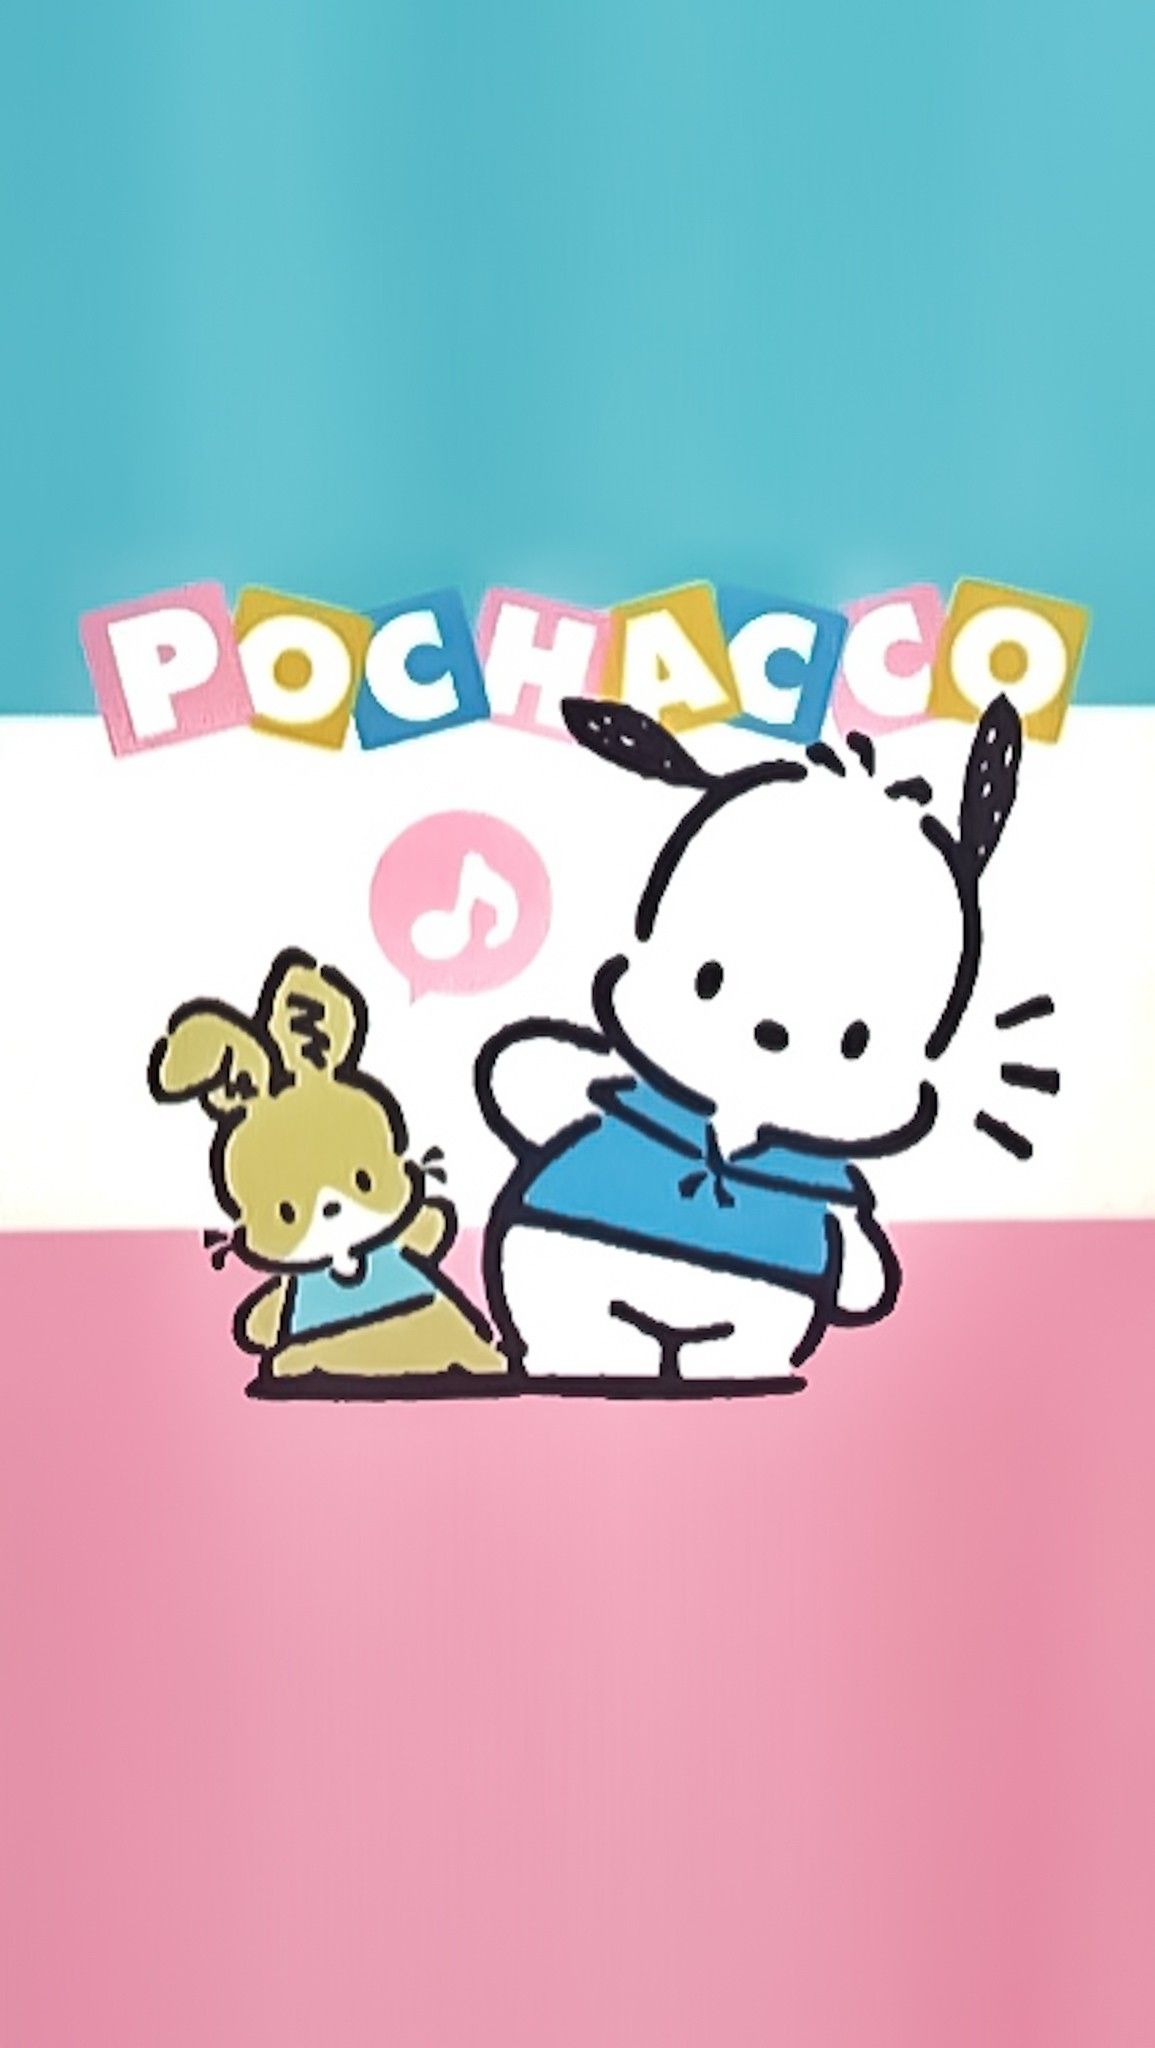 Pochacco. Cute cartoon wallpaper, Cute wallpaper, Hello kitty collection